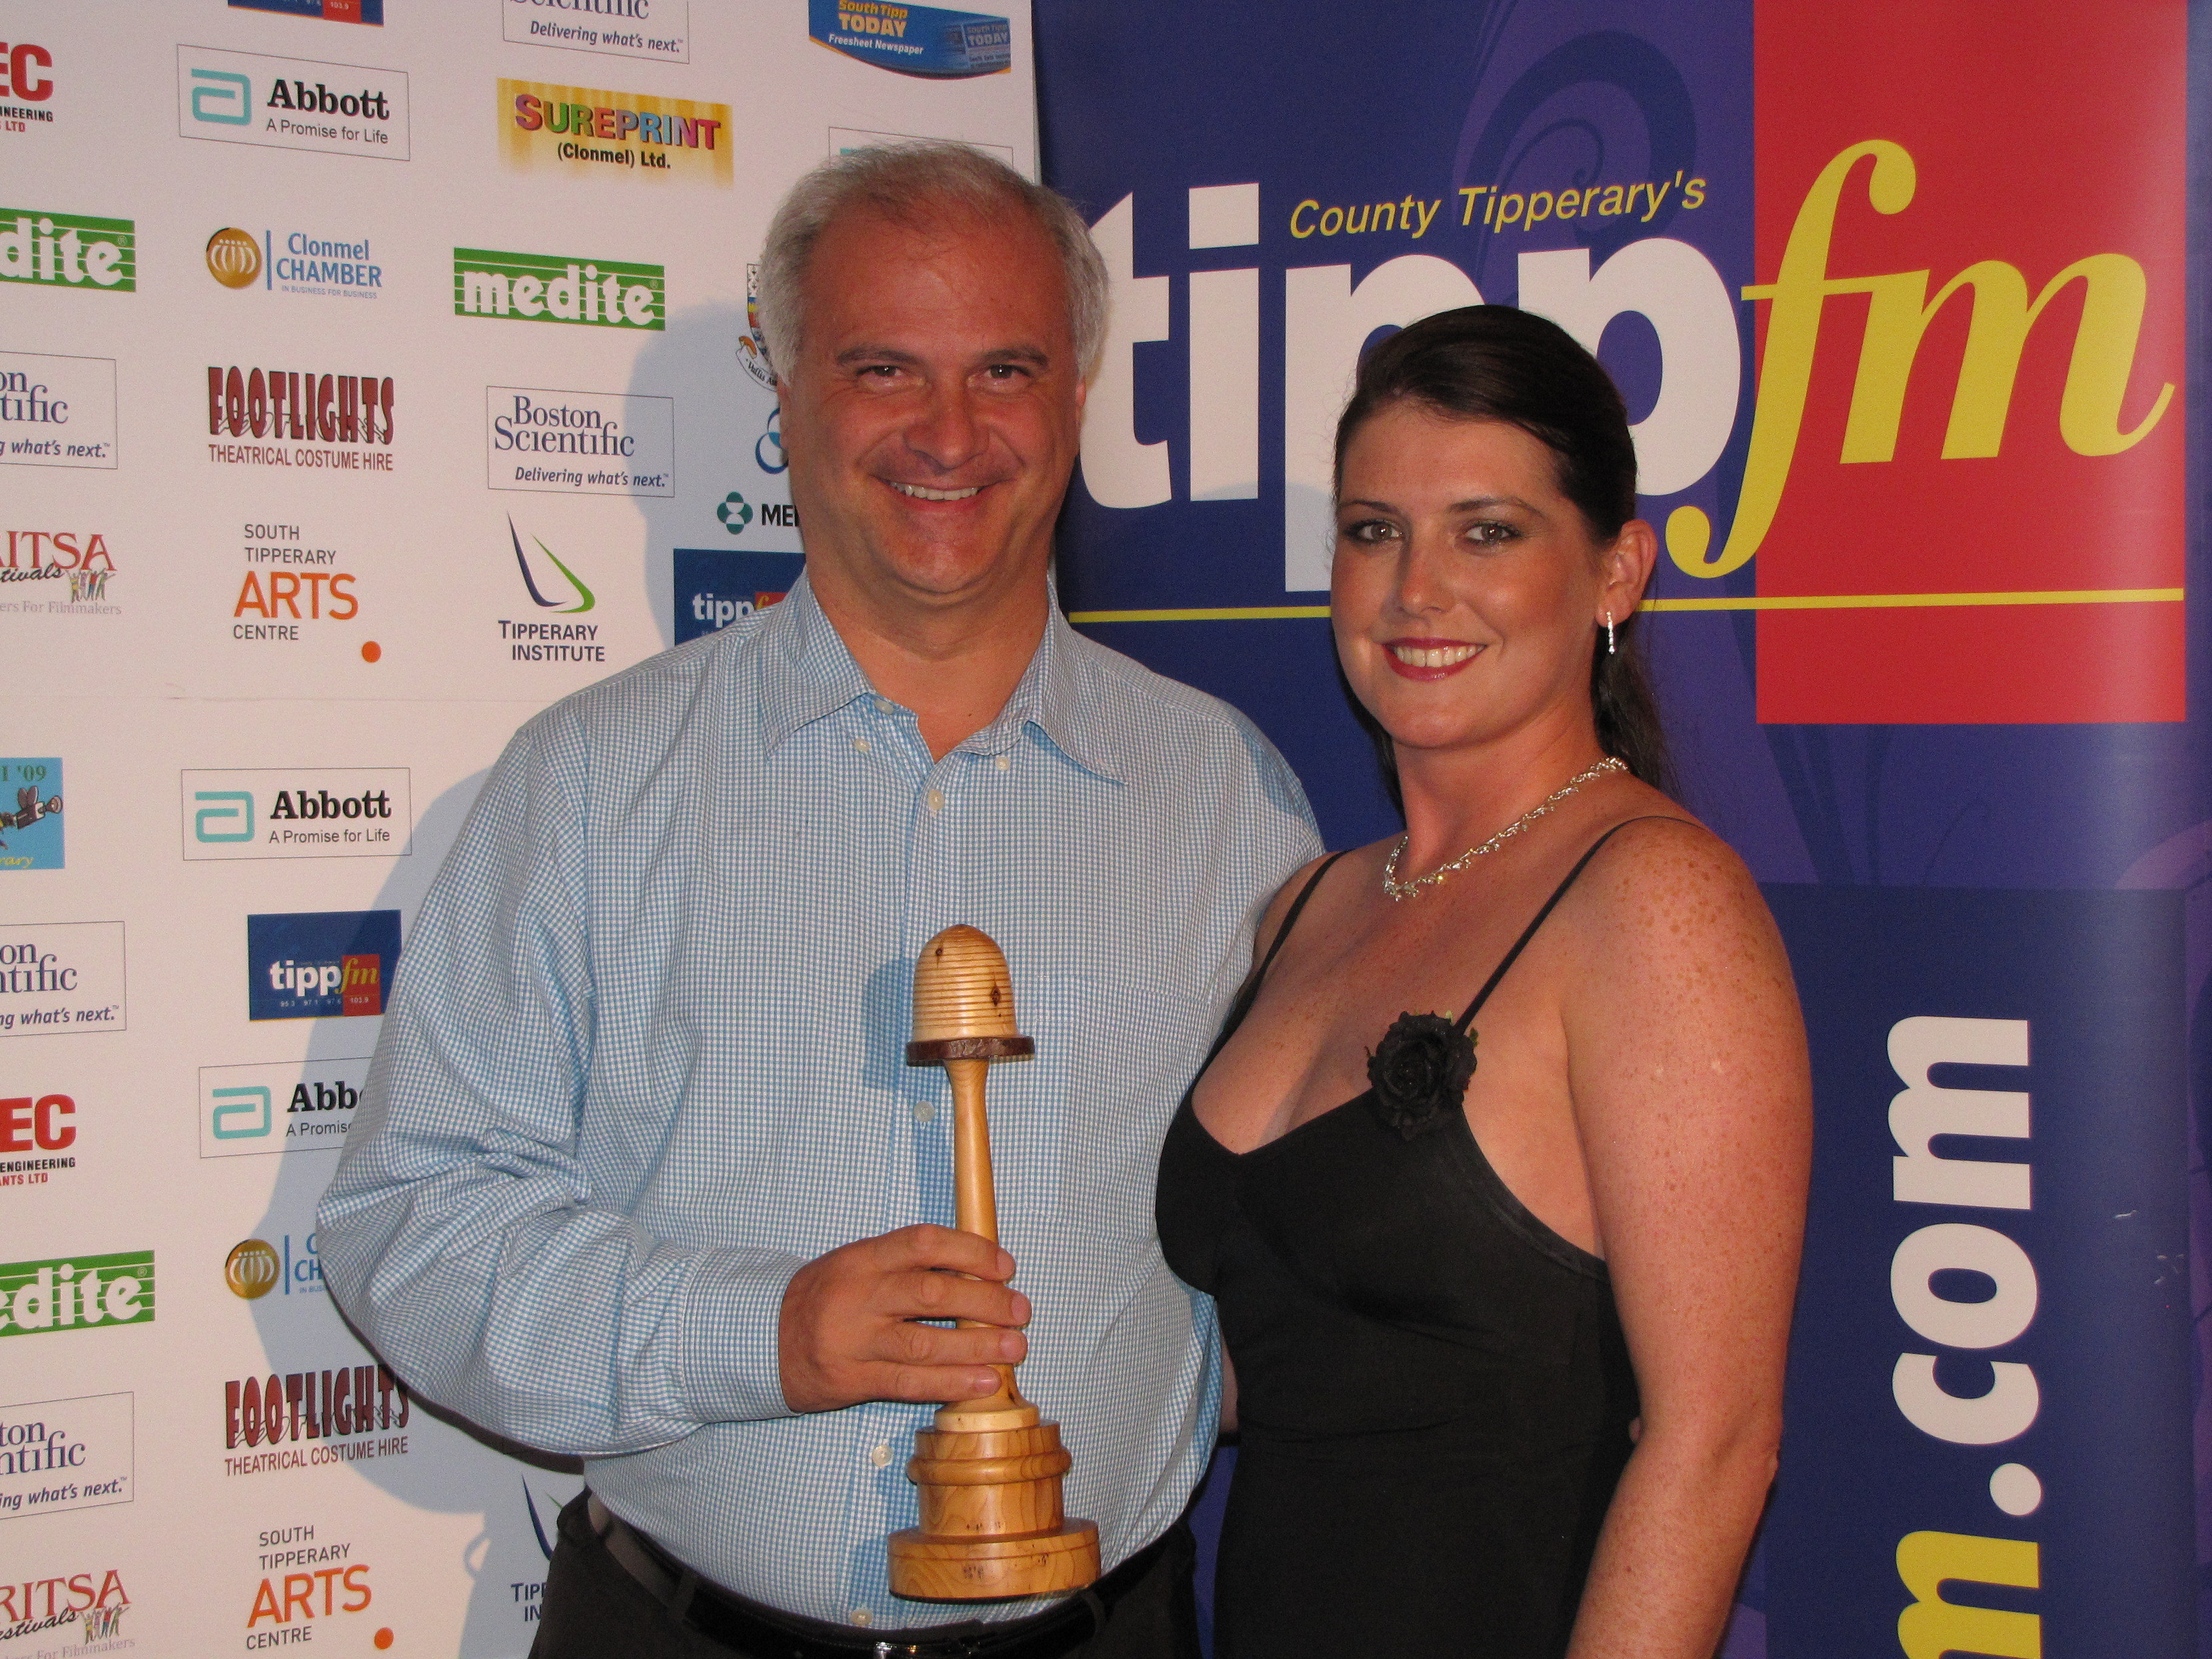 Director Mark Terry accepts the Best Environmental Film Award at the International Film Festival Ireland, Sept. 12, 2009.